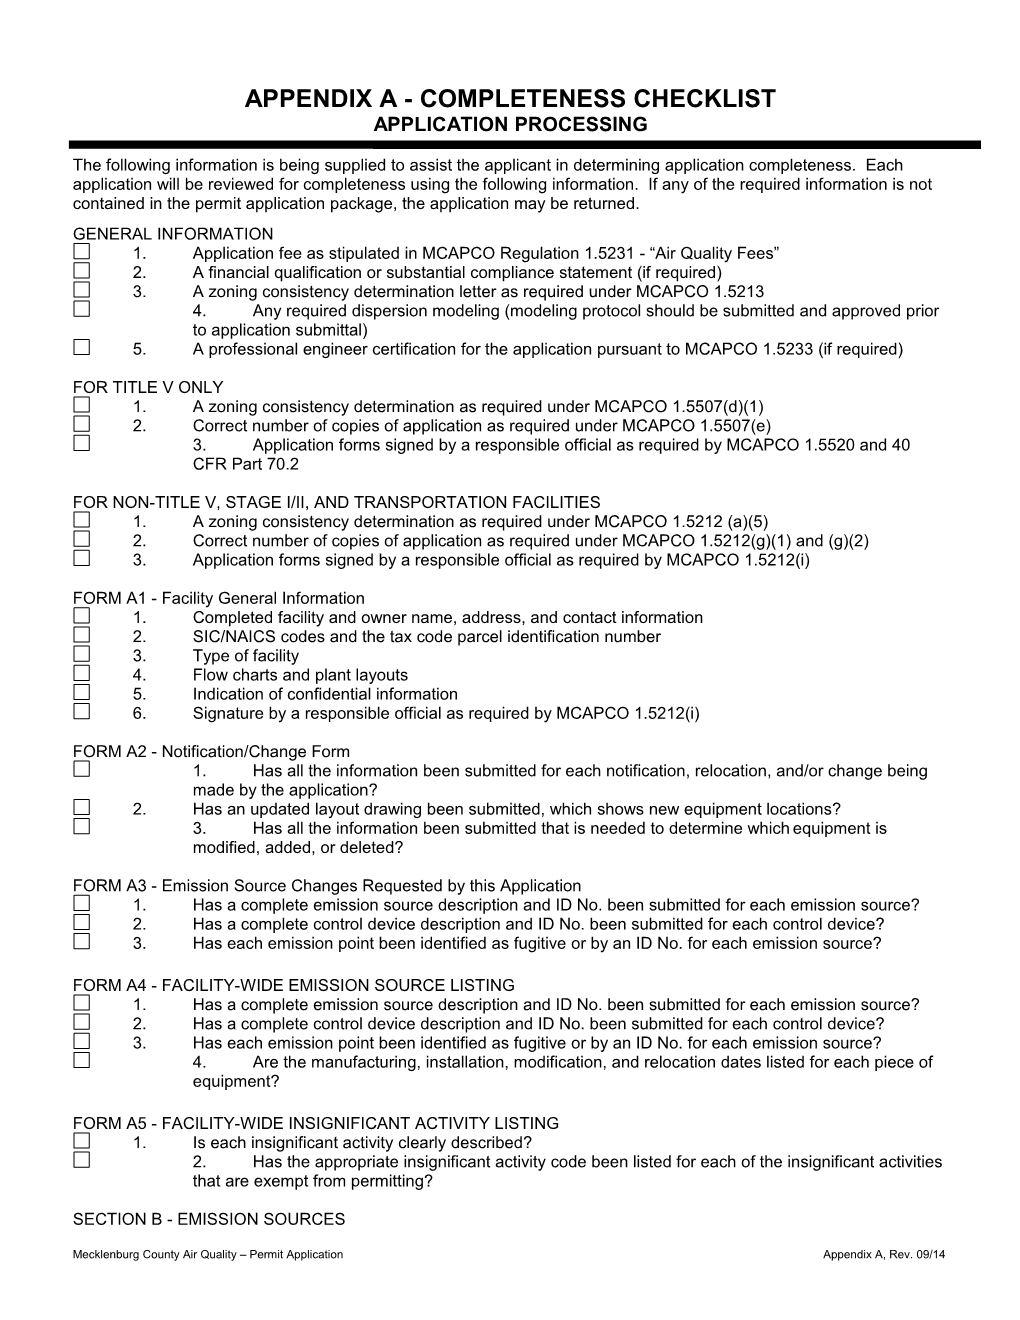 Appendix a - Completeness Checklist